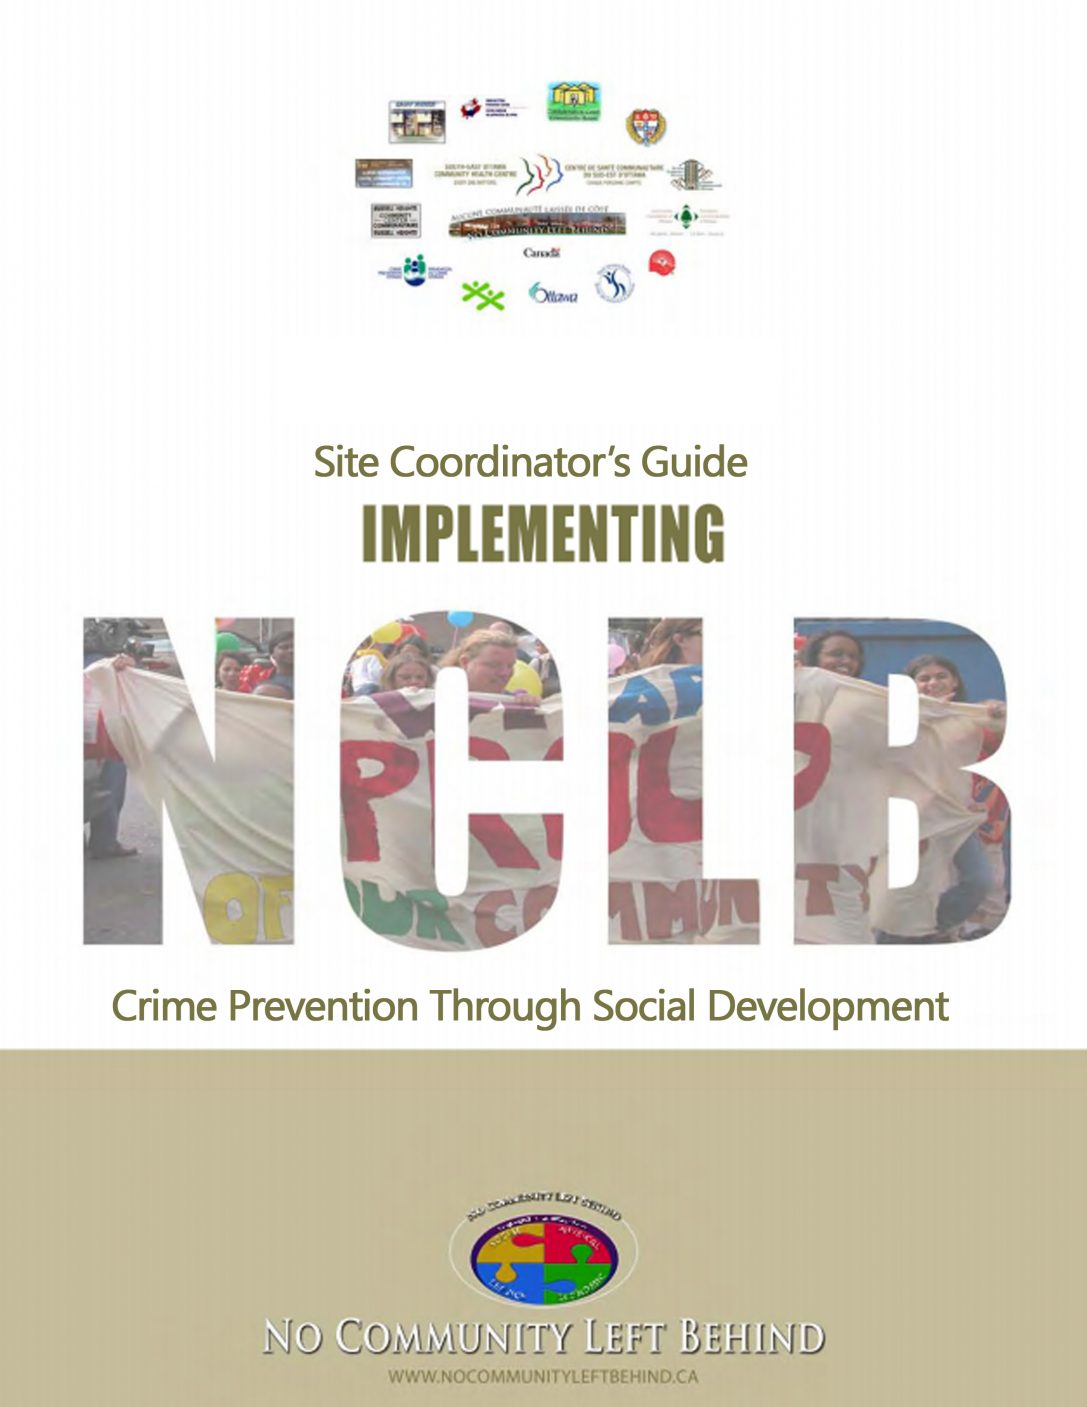 Place-based Crime Prevention Guide for Program Coordinator by Abid Ullah Jan